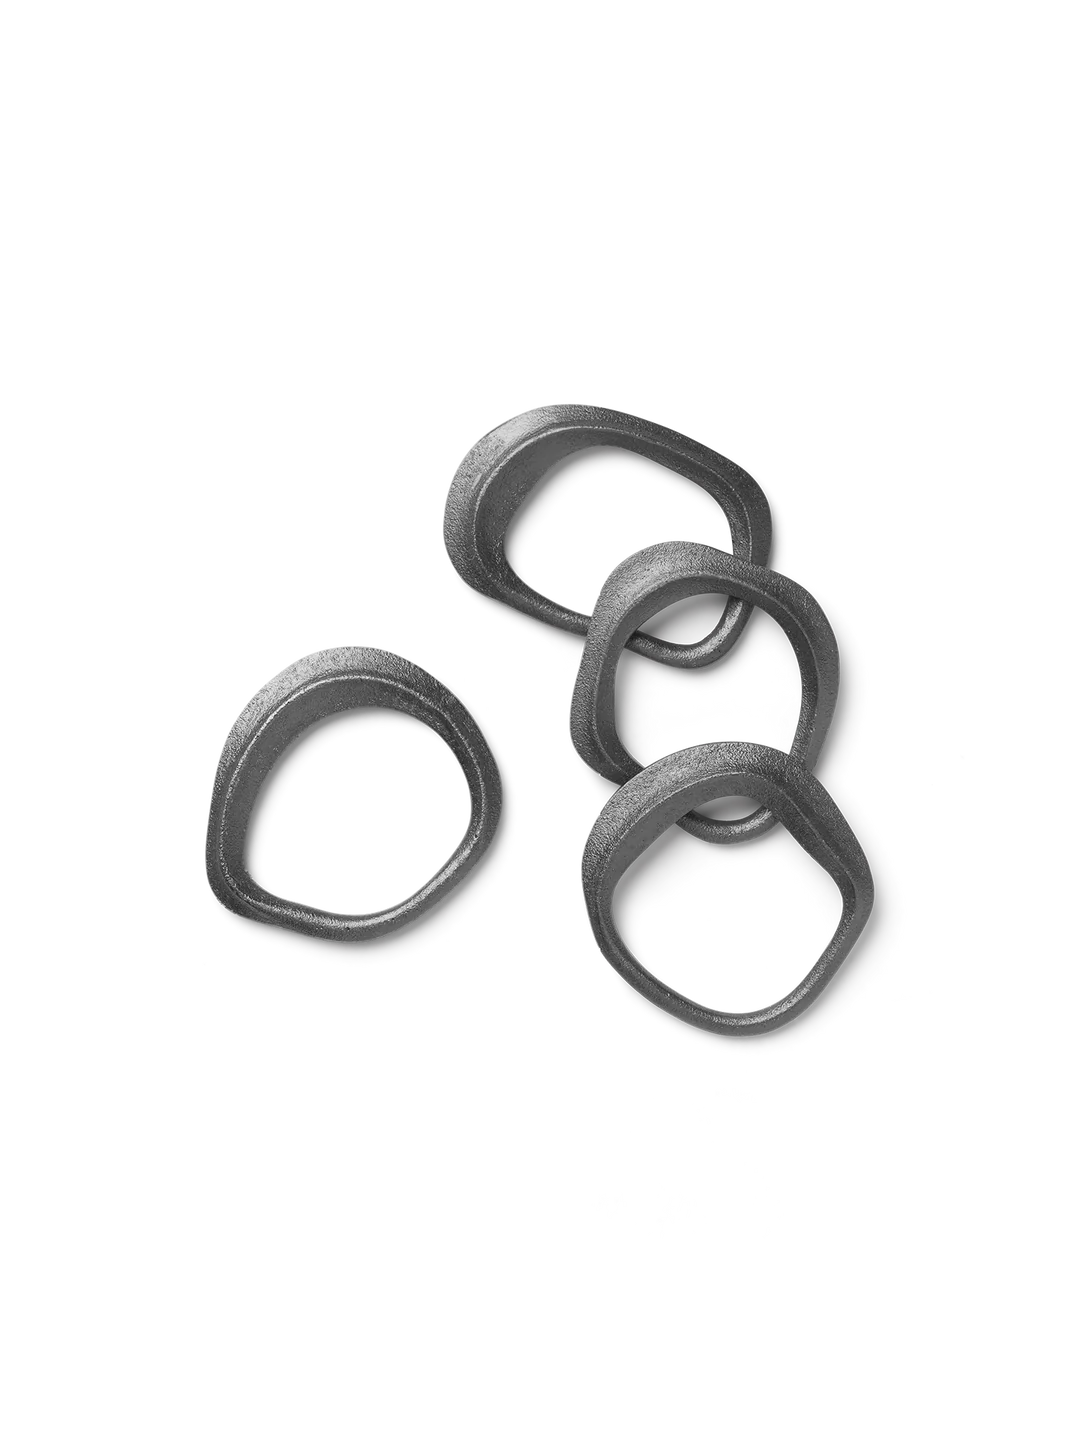 Flow Napkin Rings Set of 4 - Black Brass